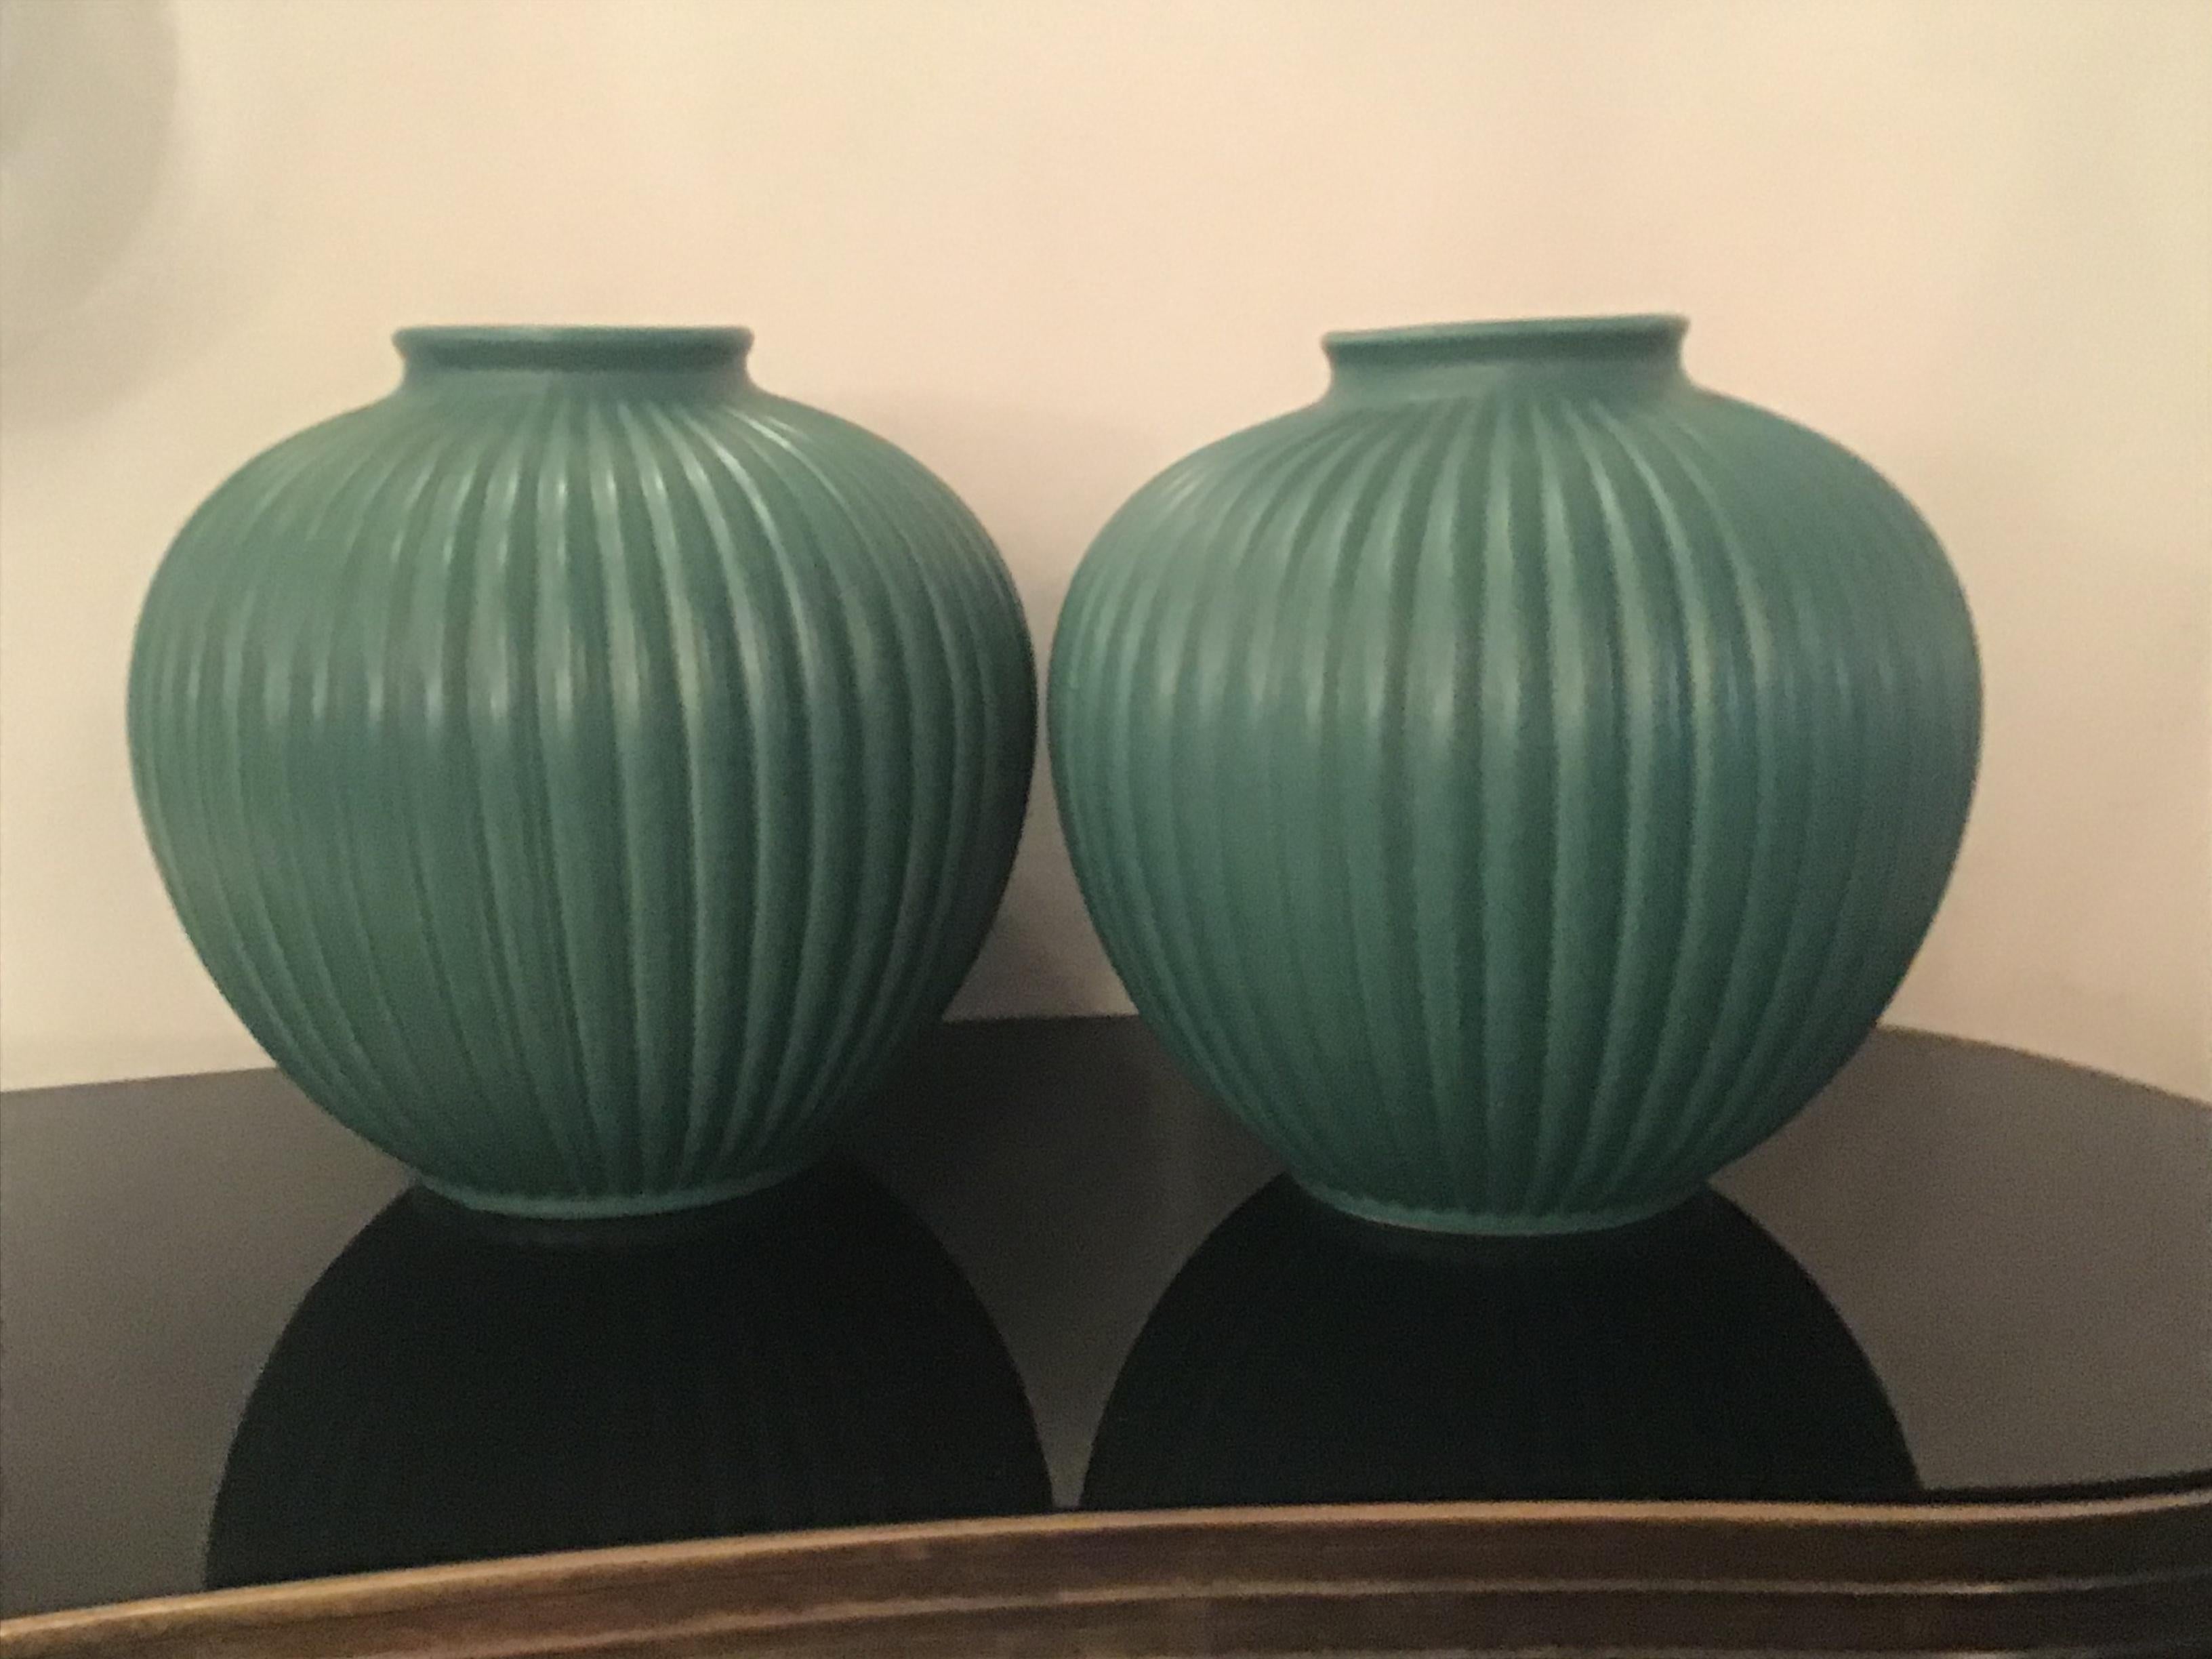 Richard Ginori Giovanni Gariboldi Pair of Vases Green Ceramic 1950 Italy For Sale 7